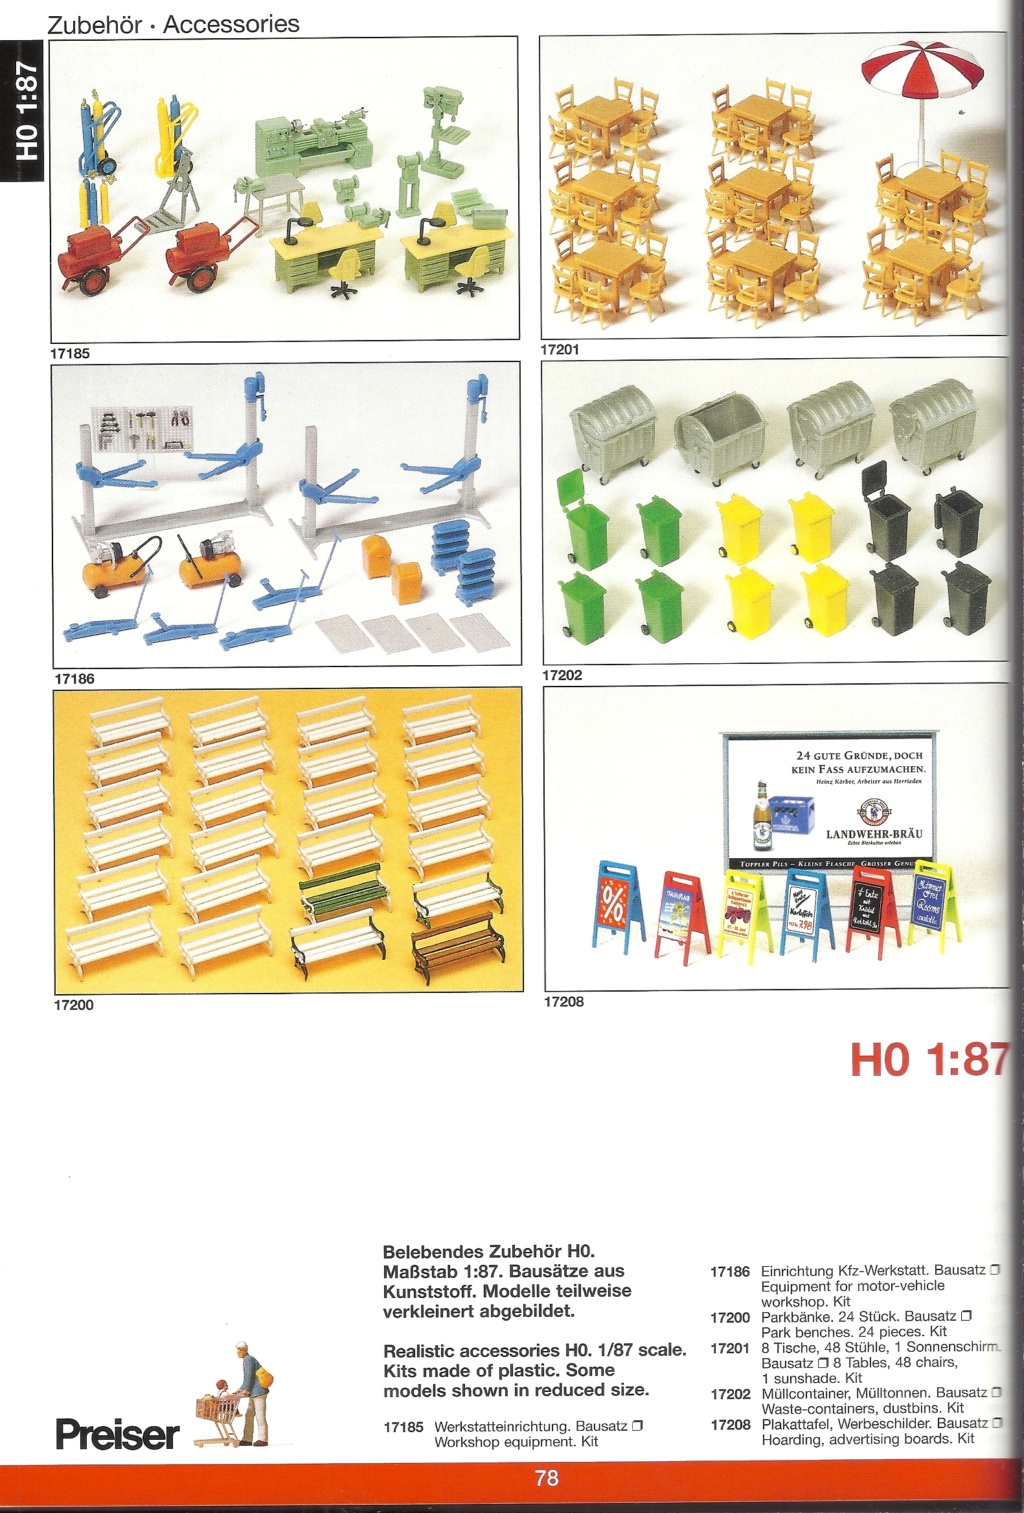 [PREISER 2007] Catalogue PK 24 2007 Preis723